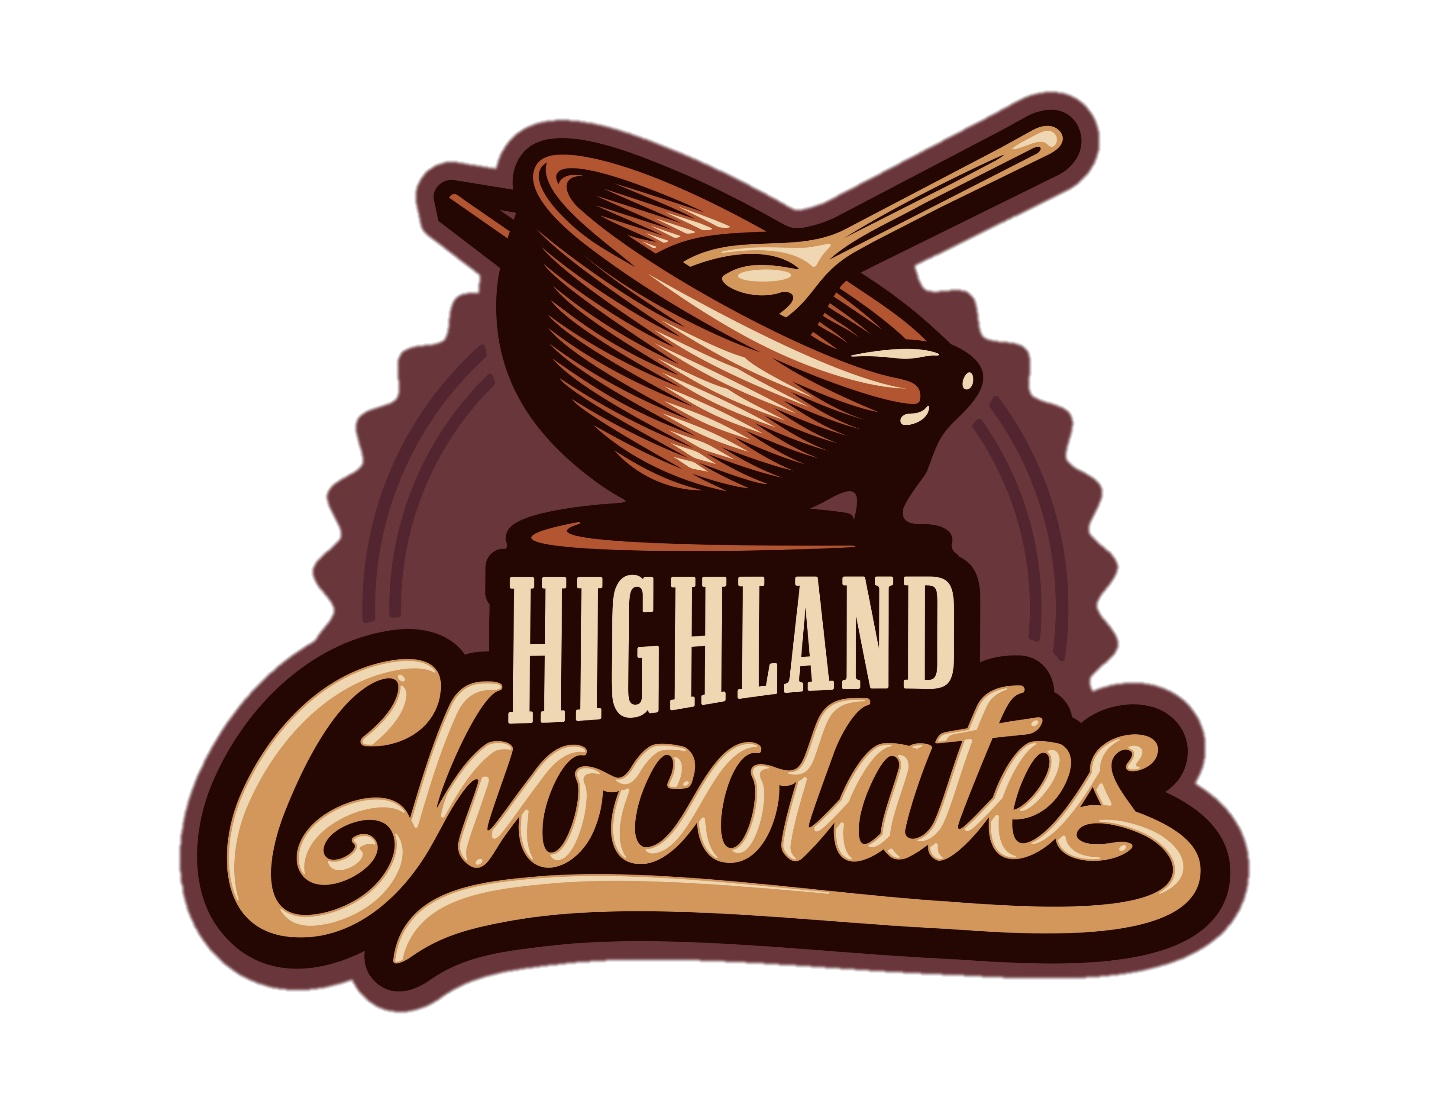 About us - Highland Chocolates